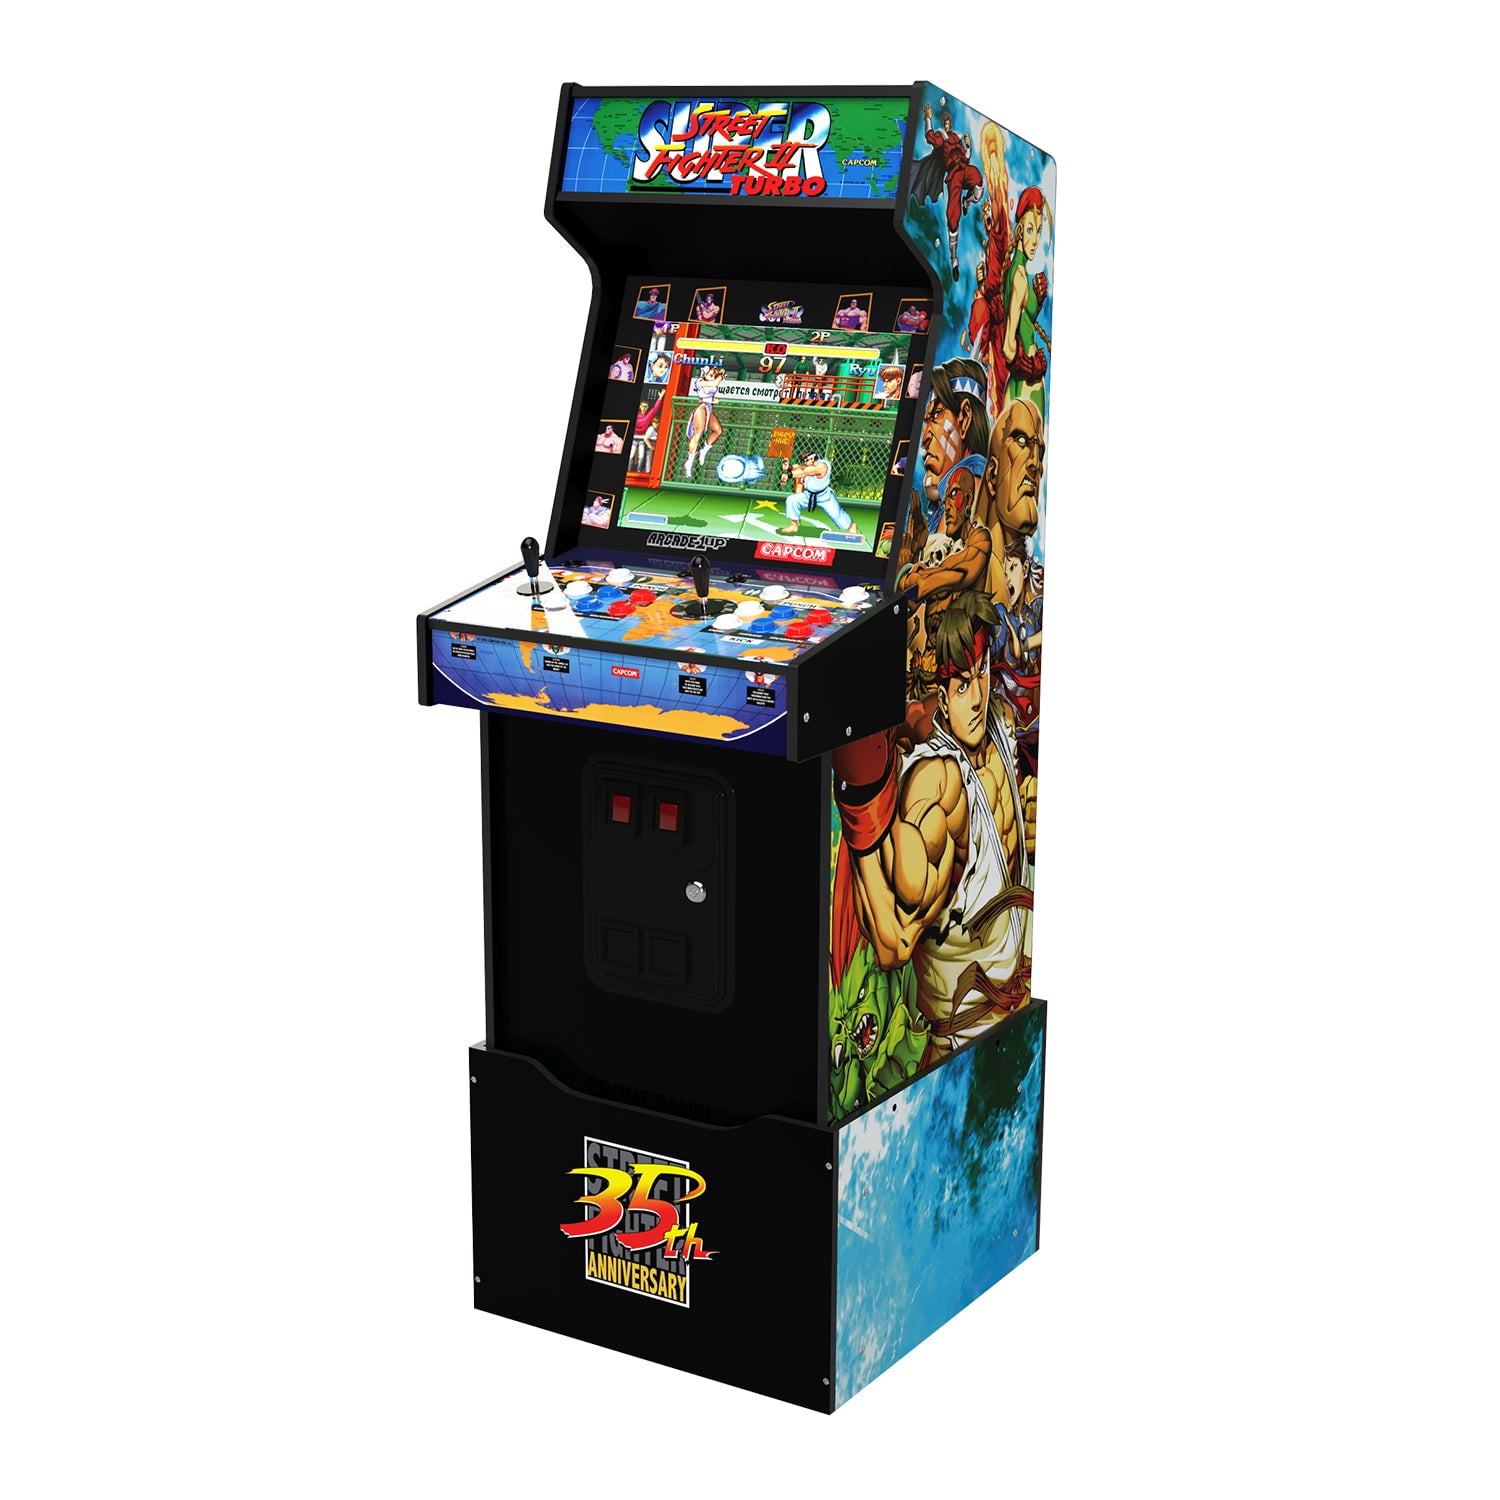 Capcom Legacy 35th Anniversary Arcade Game14-n-1 Shinku Hadoken Edition,  Arcade1Up